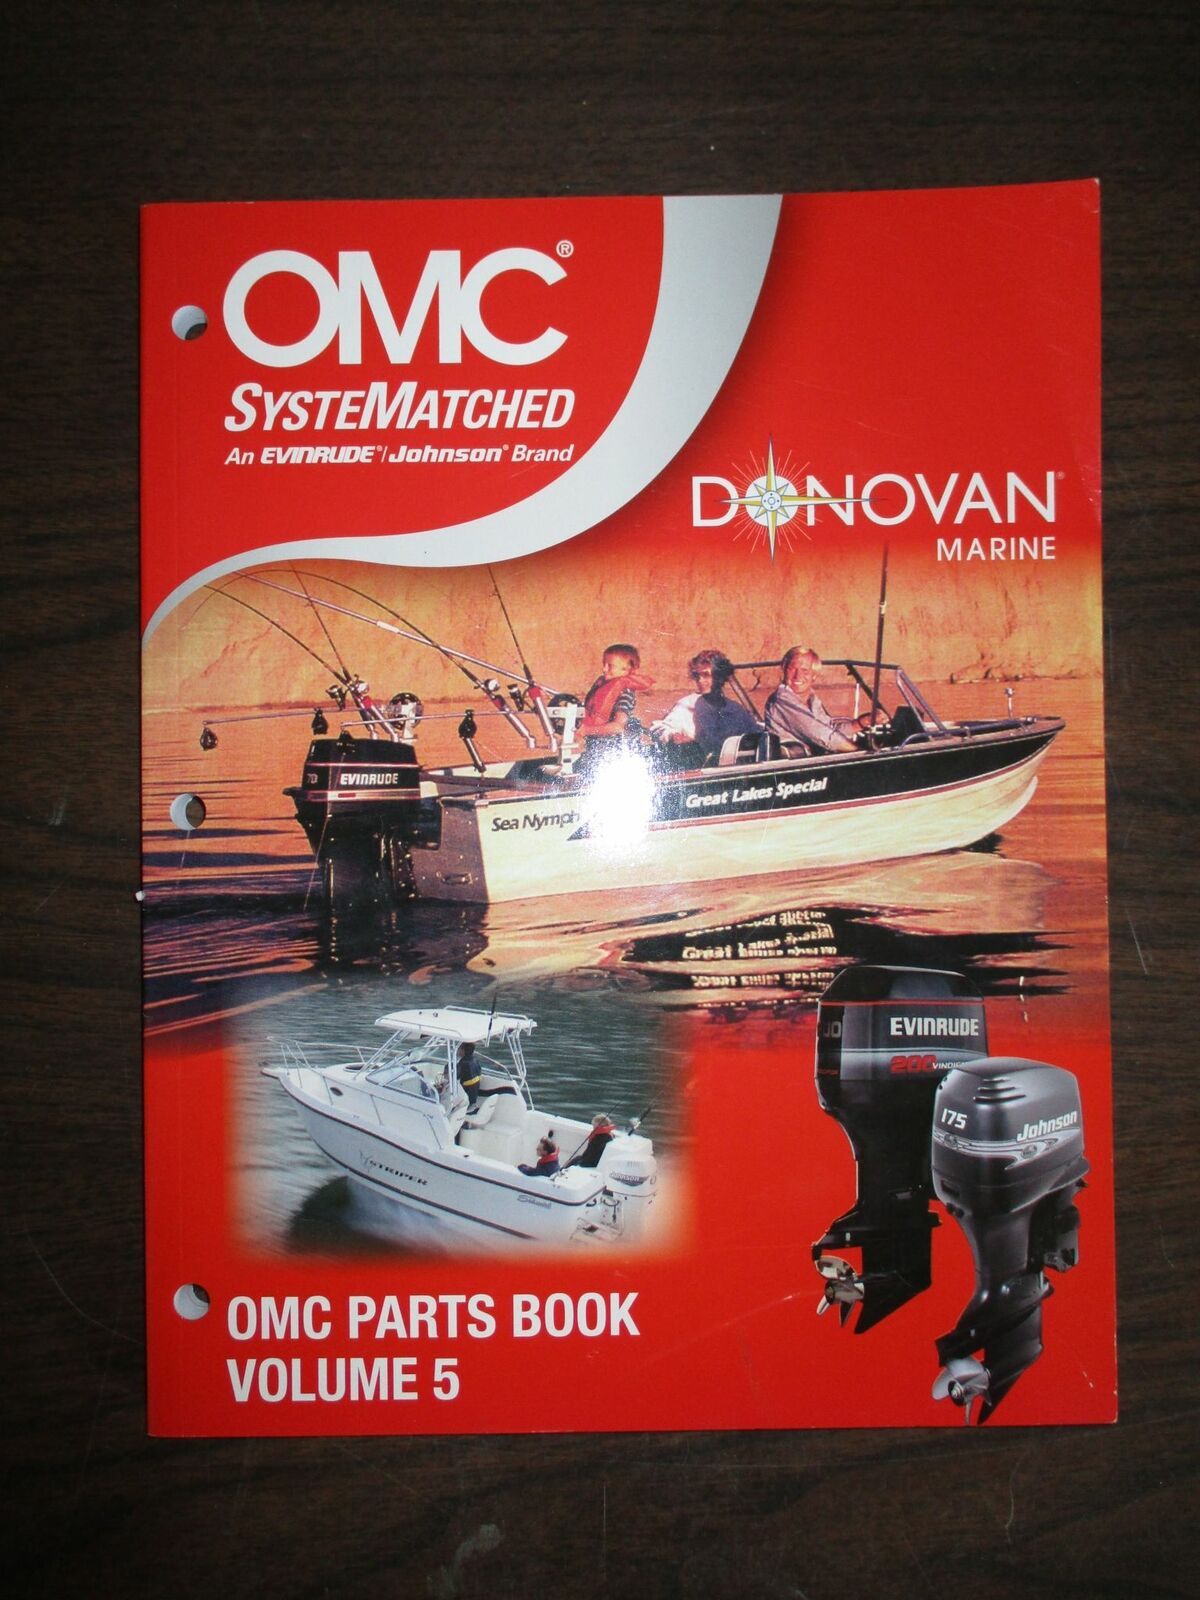 Johnson/Evinrude OMC "Donovan Marine" Parts Book Volume 5